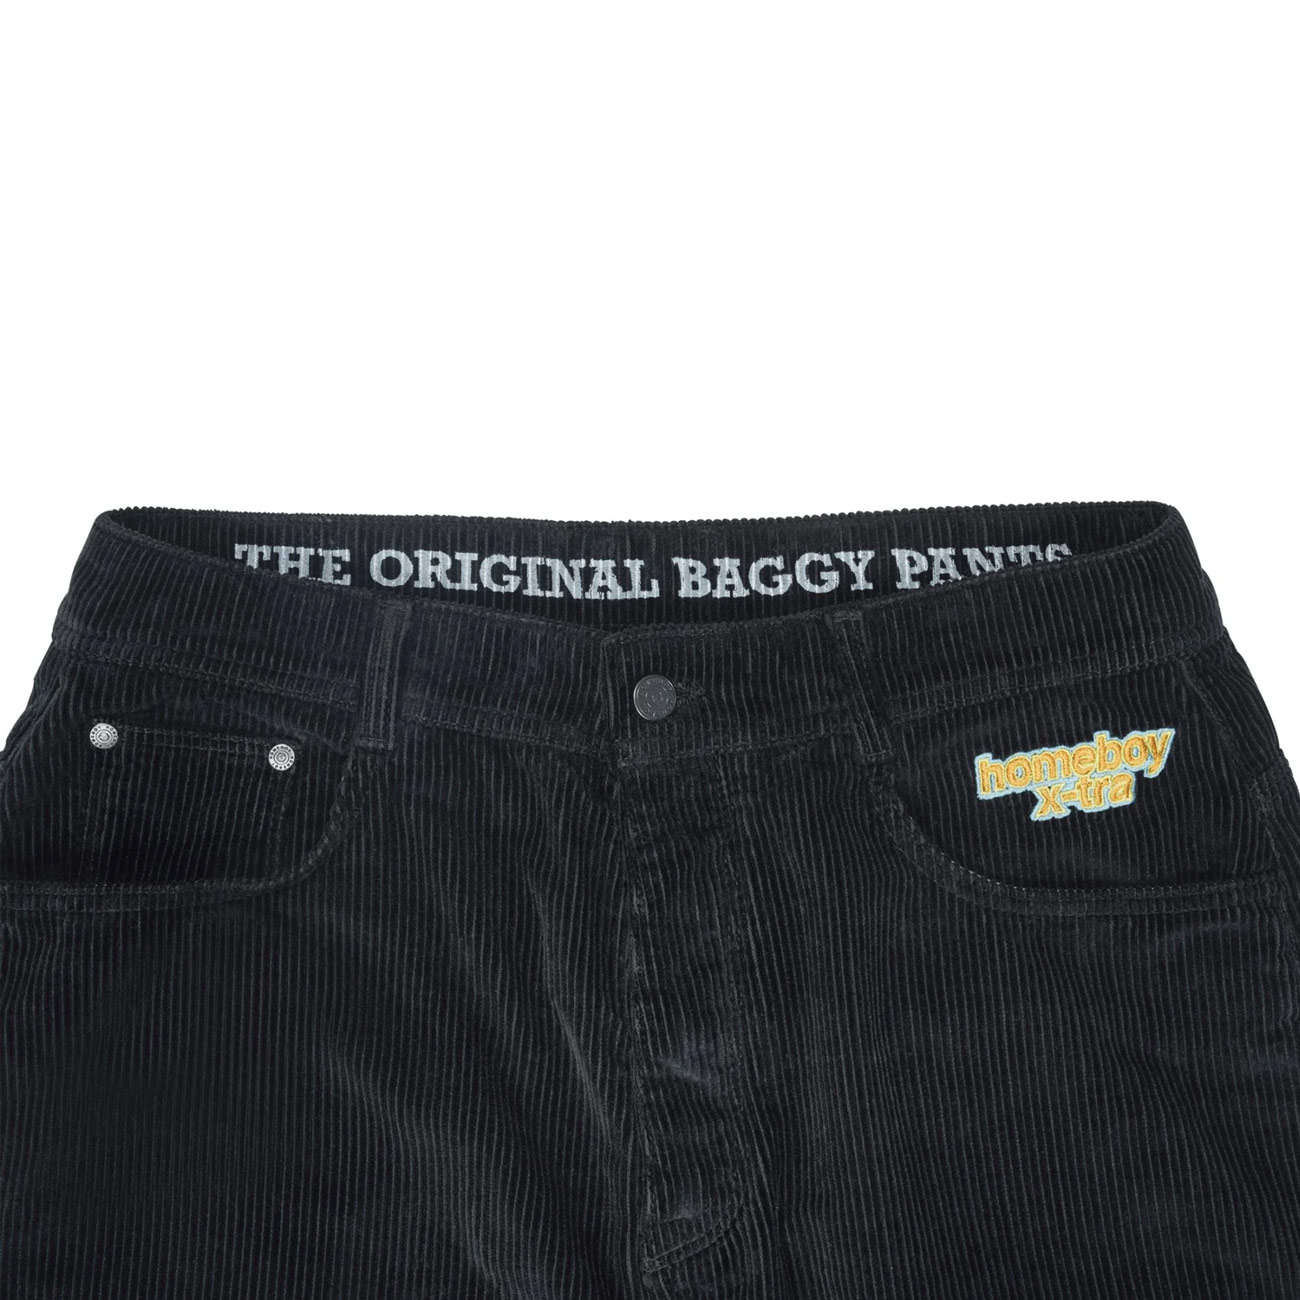 Homeboy Shorts x-tra Baggy Cord (black)